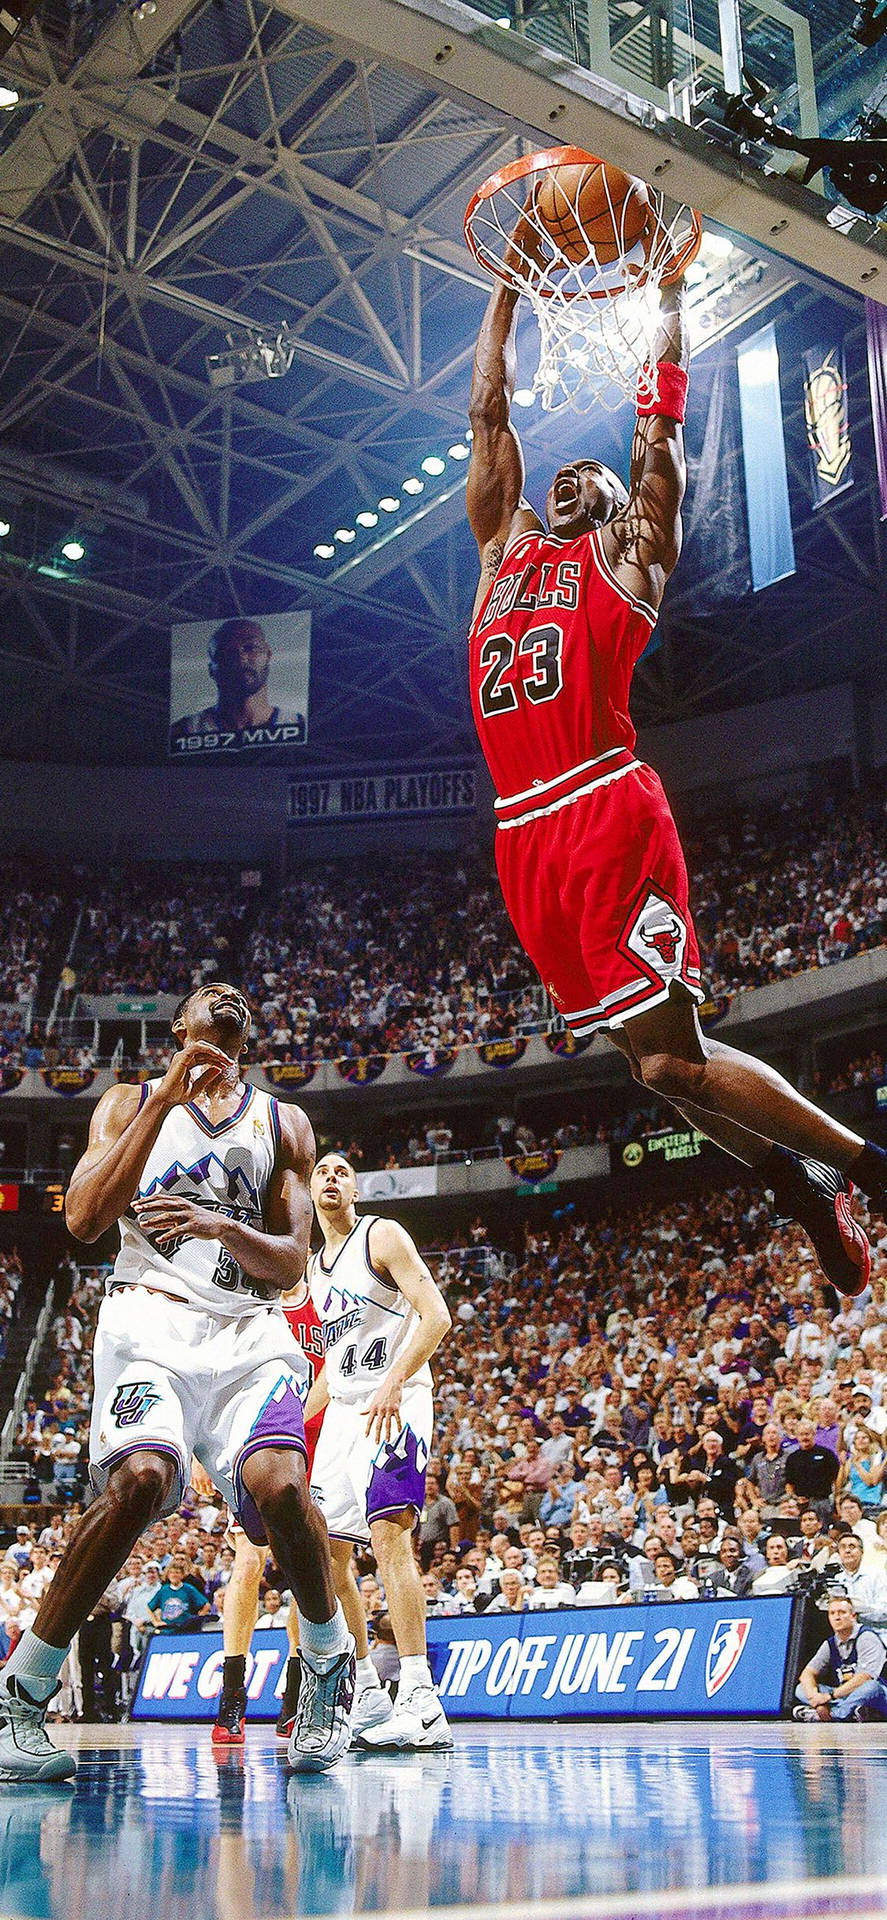 Nba Iphone Michael Jordan 1998 Nba Finals Background